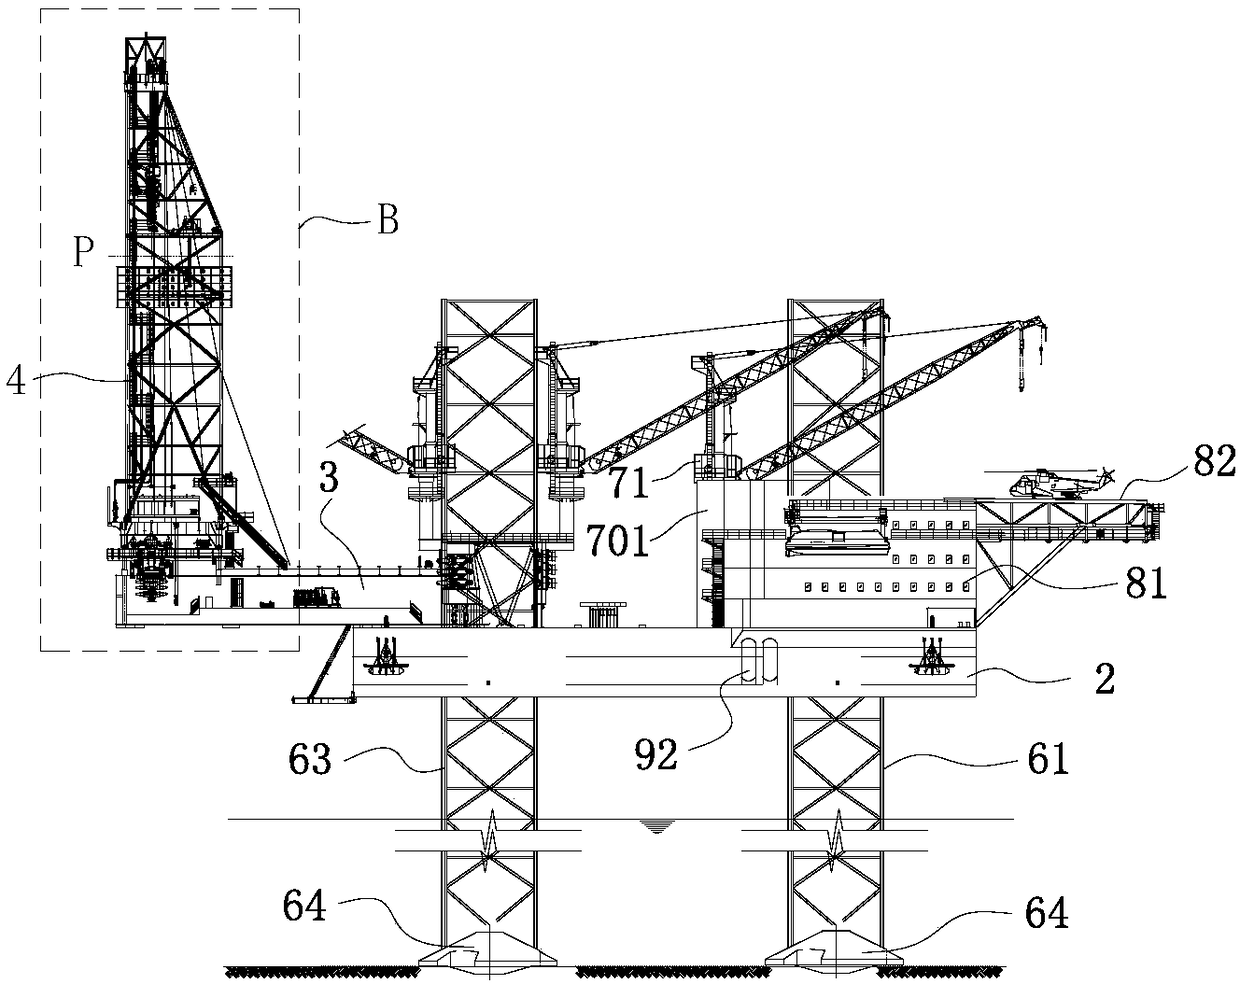 Self-lifting type drilling platform